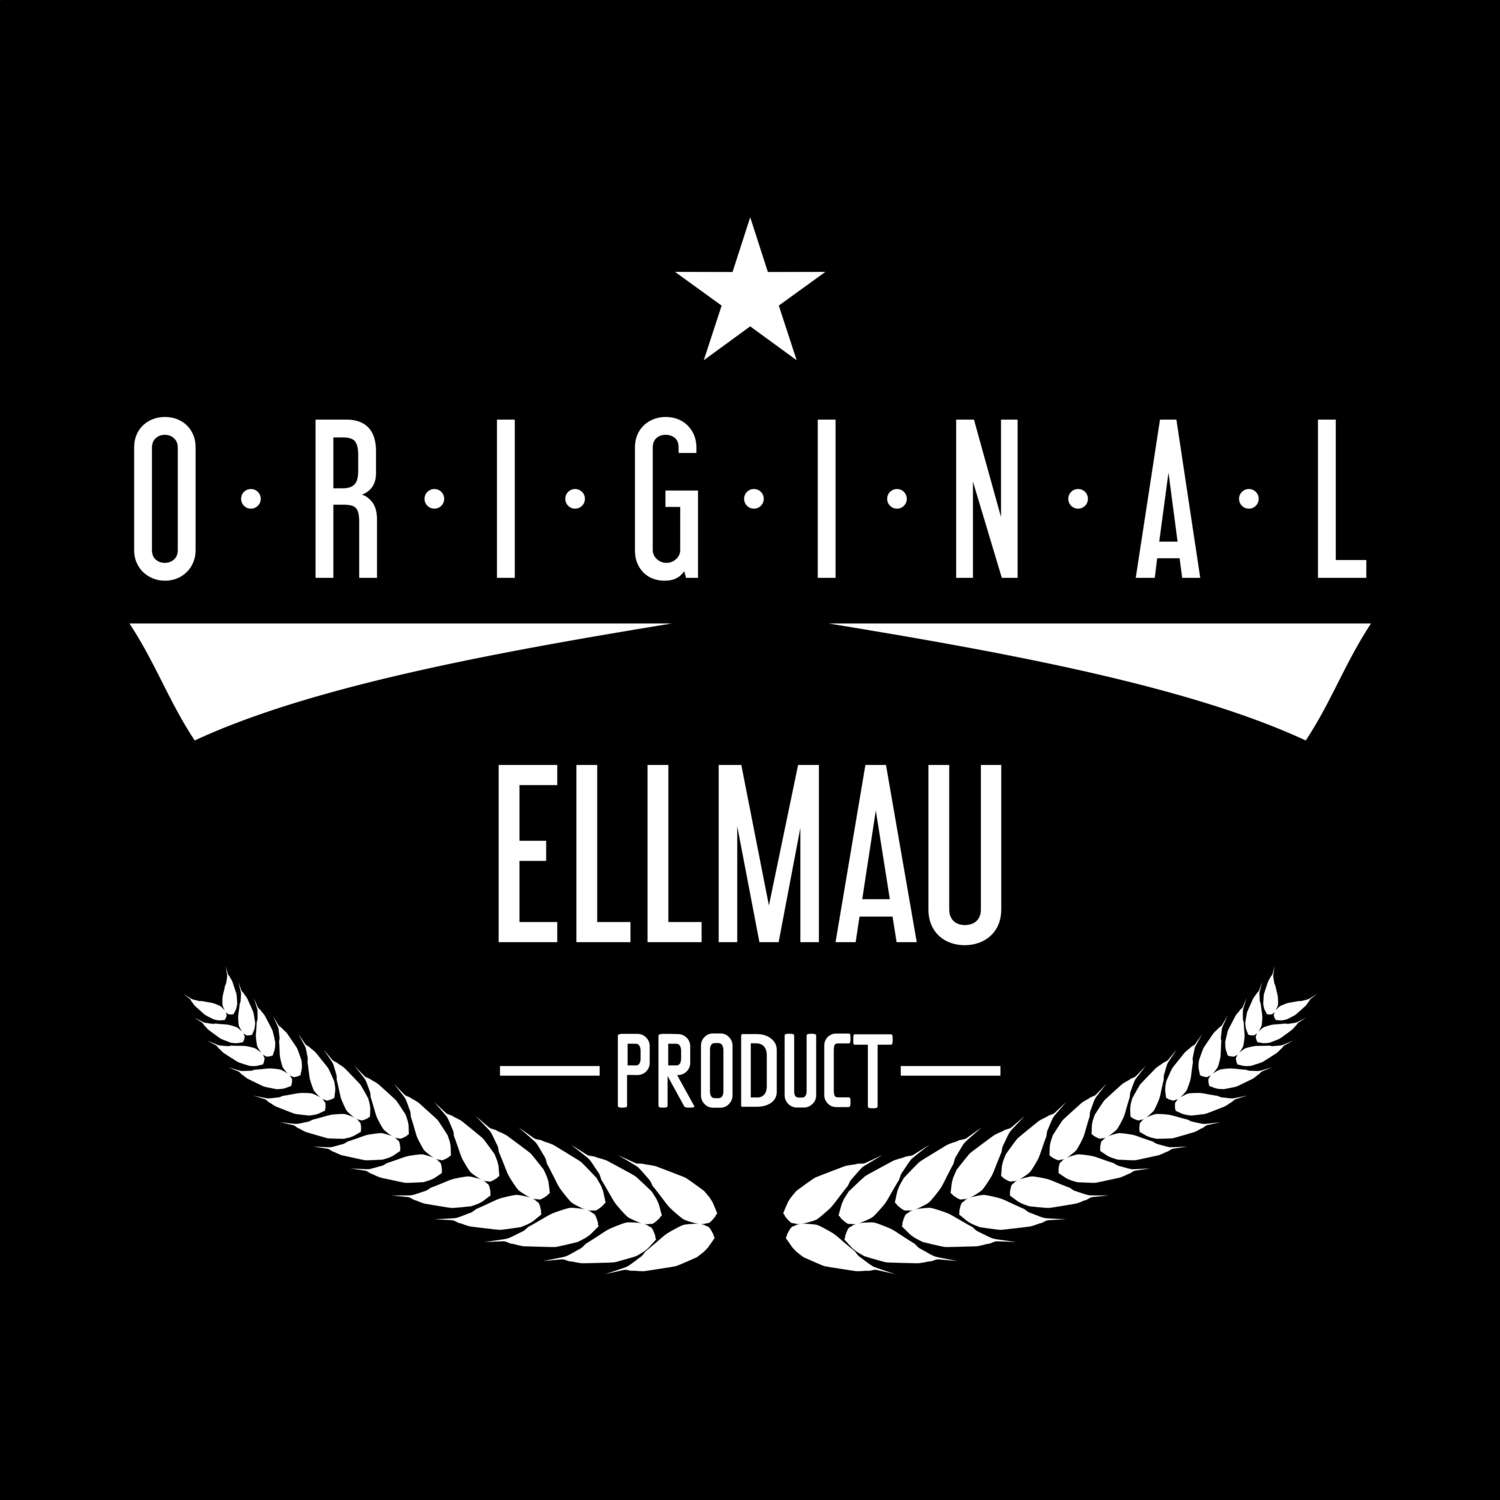 Ellmau T-Shirt »Original Product«